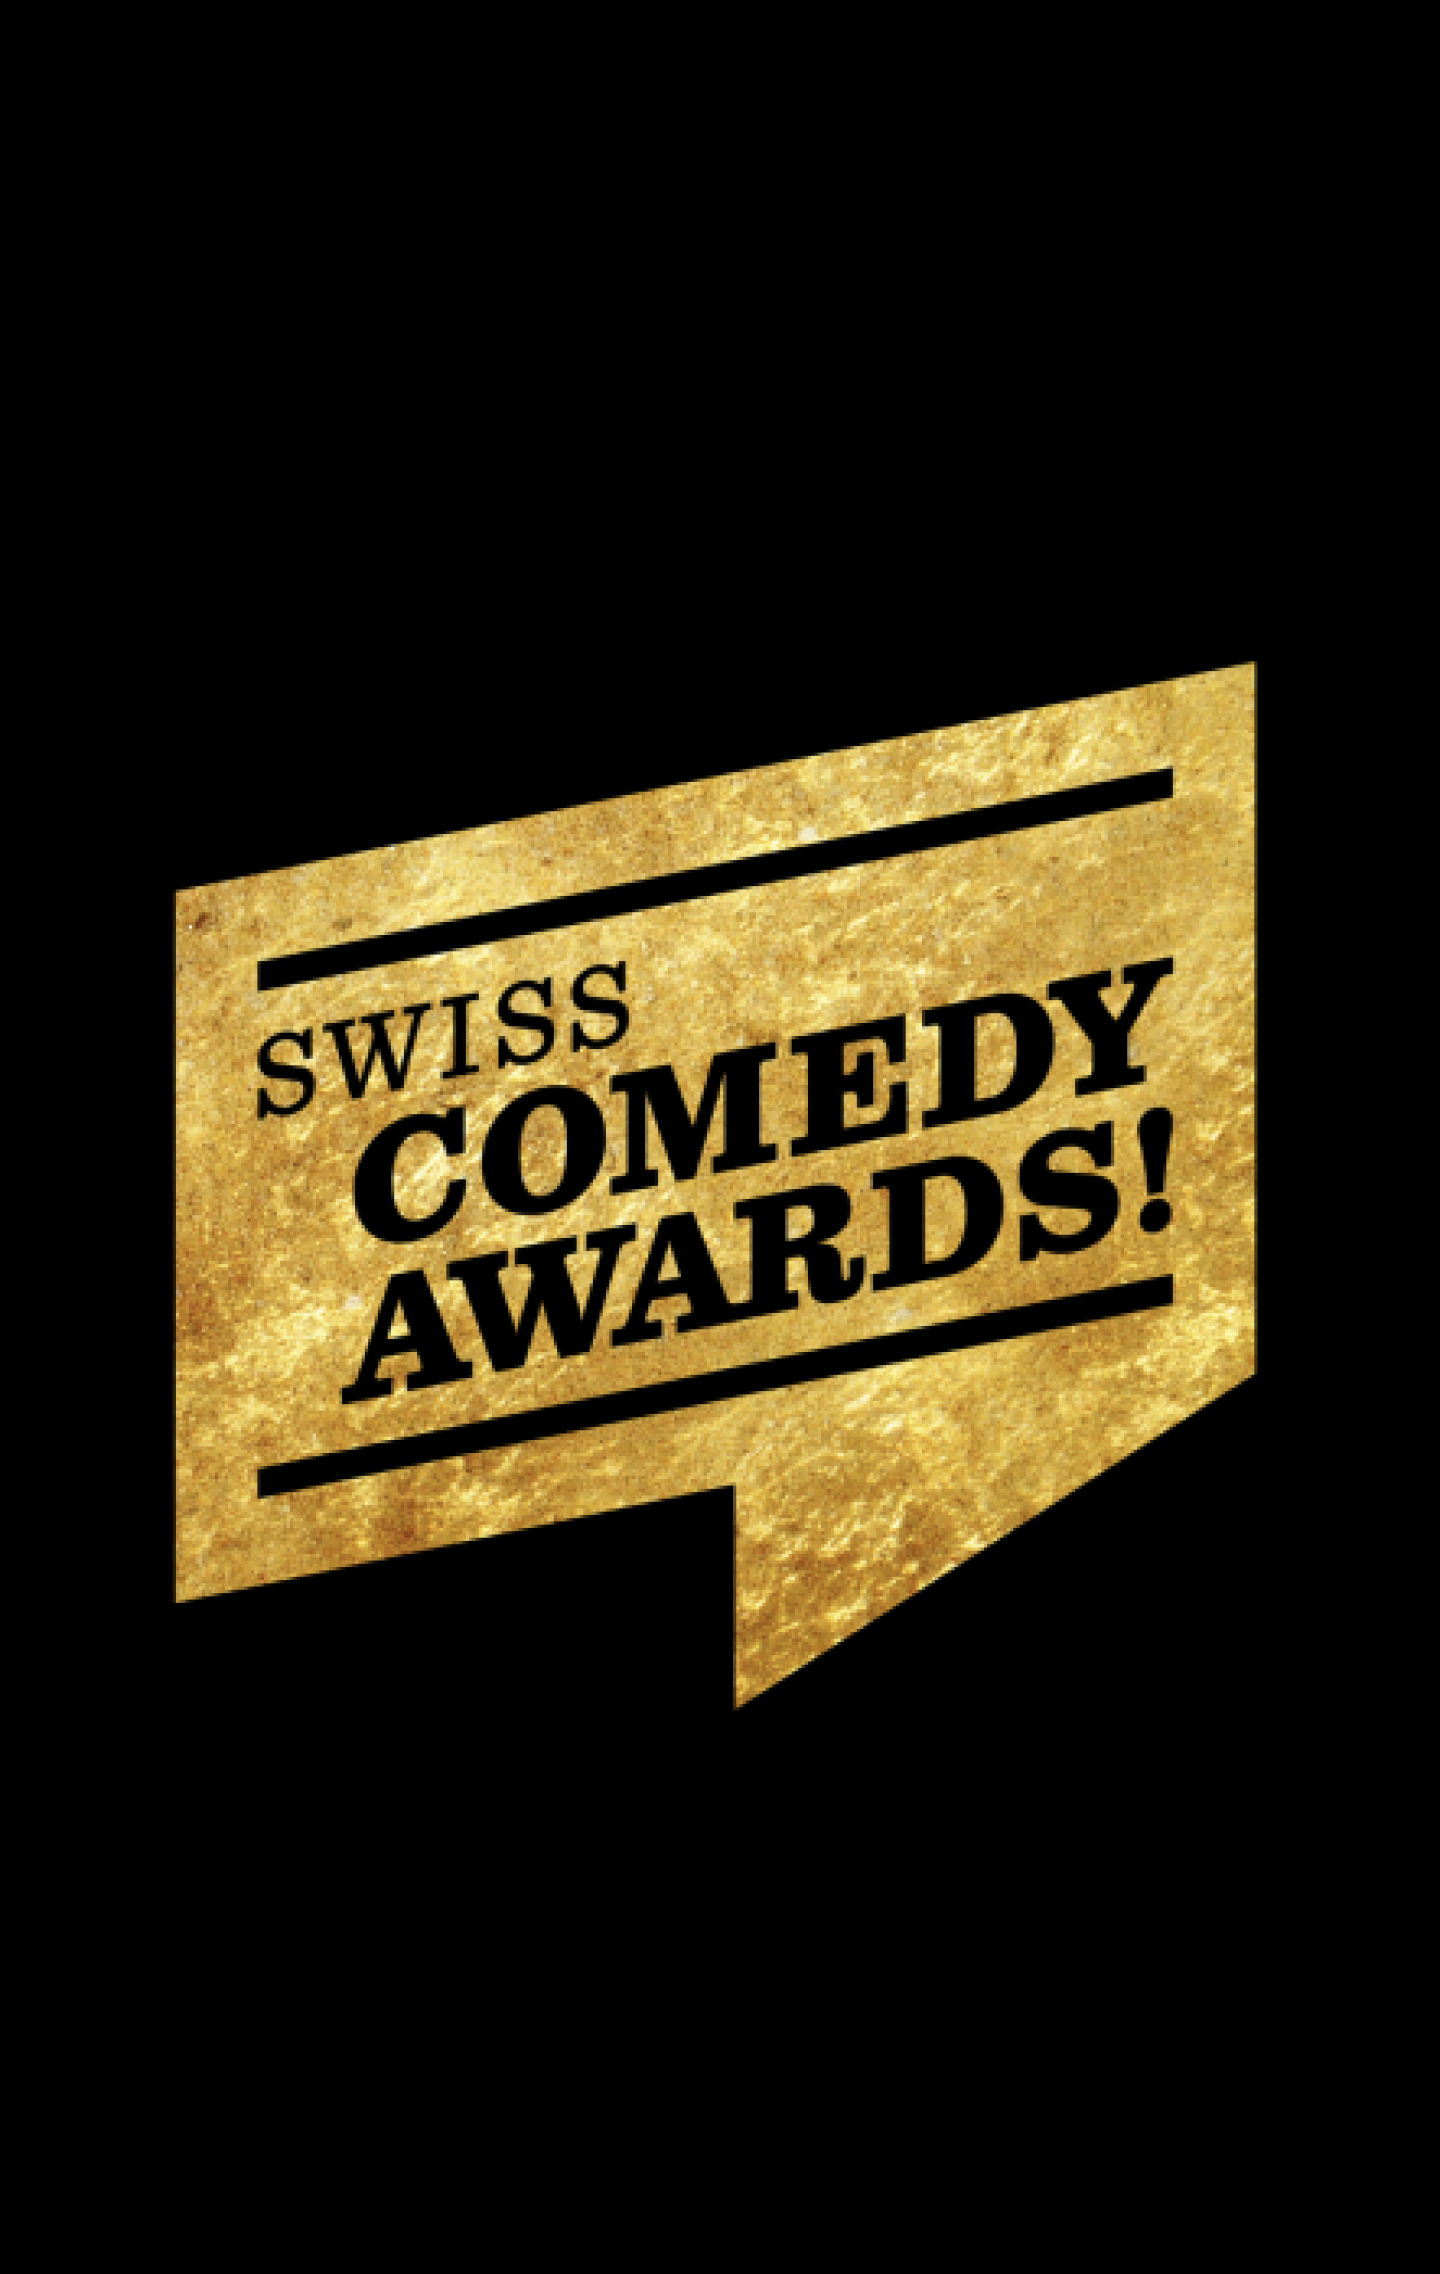 Swiss Comedy Awards!